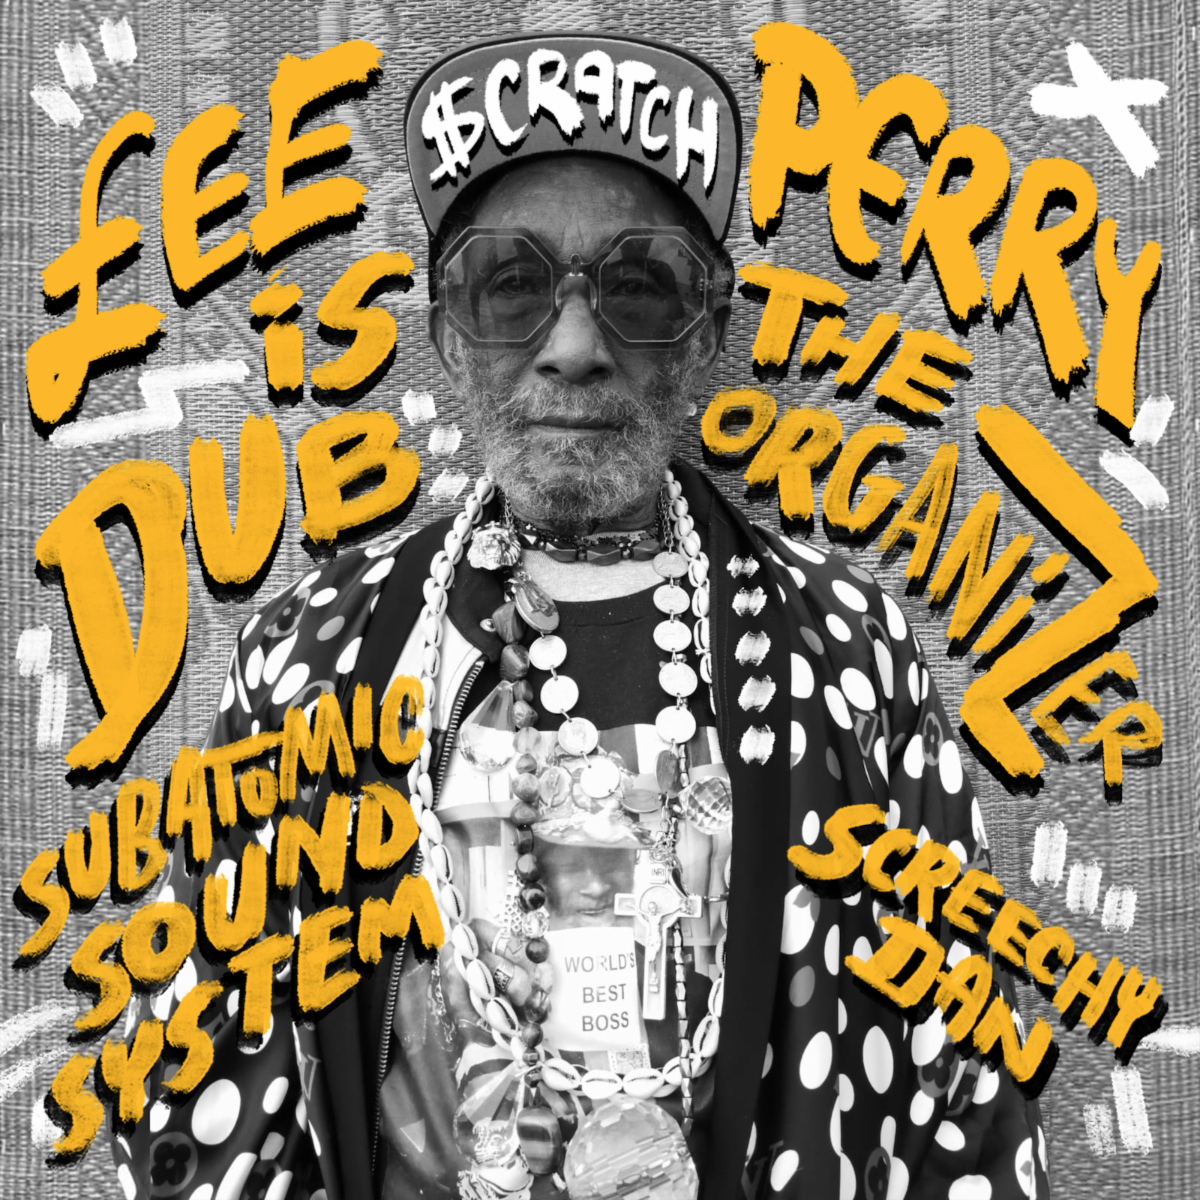 LEE “SCRATCH” PERRY IS THE DUB ORGANIZER - reggae Tastemaker